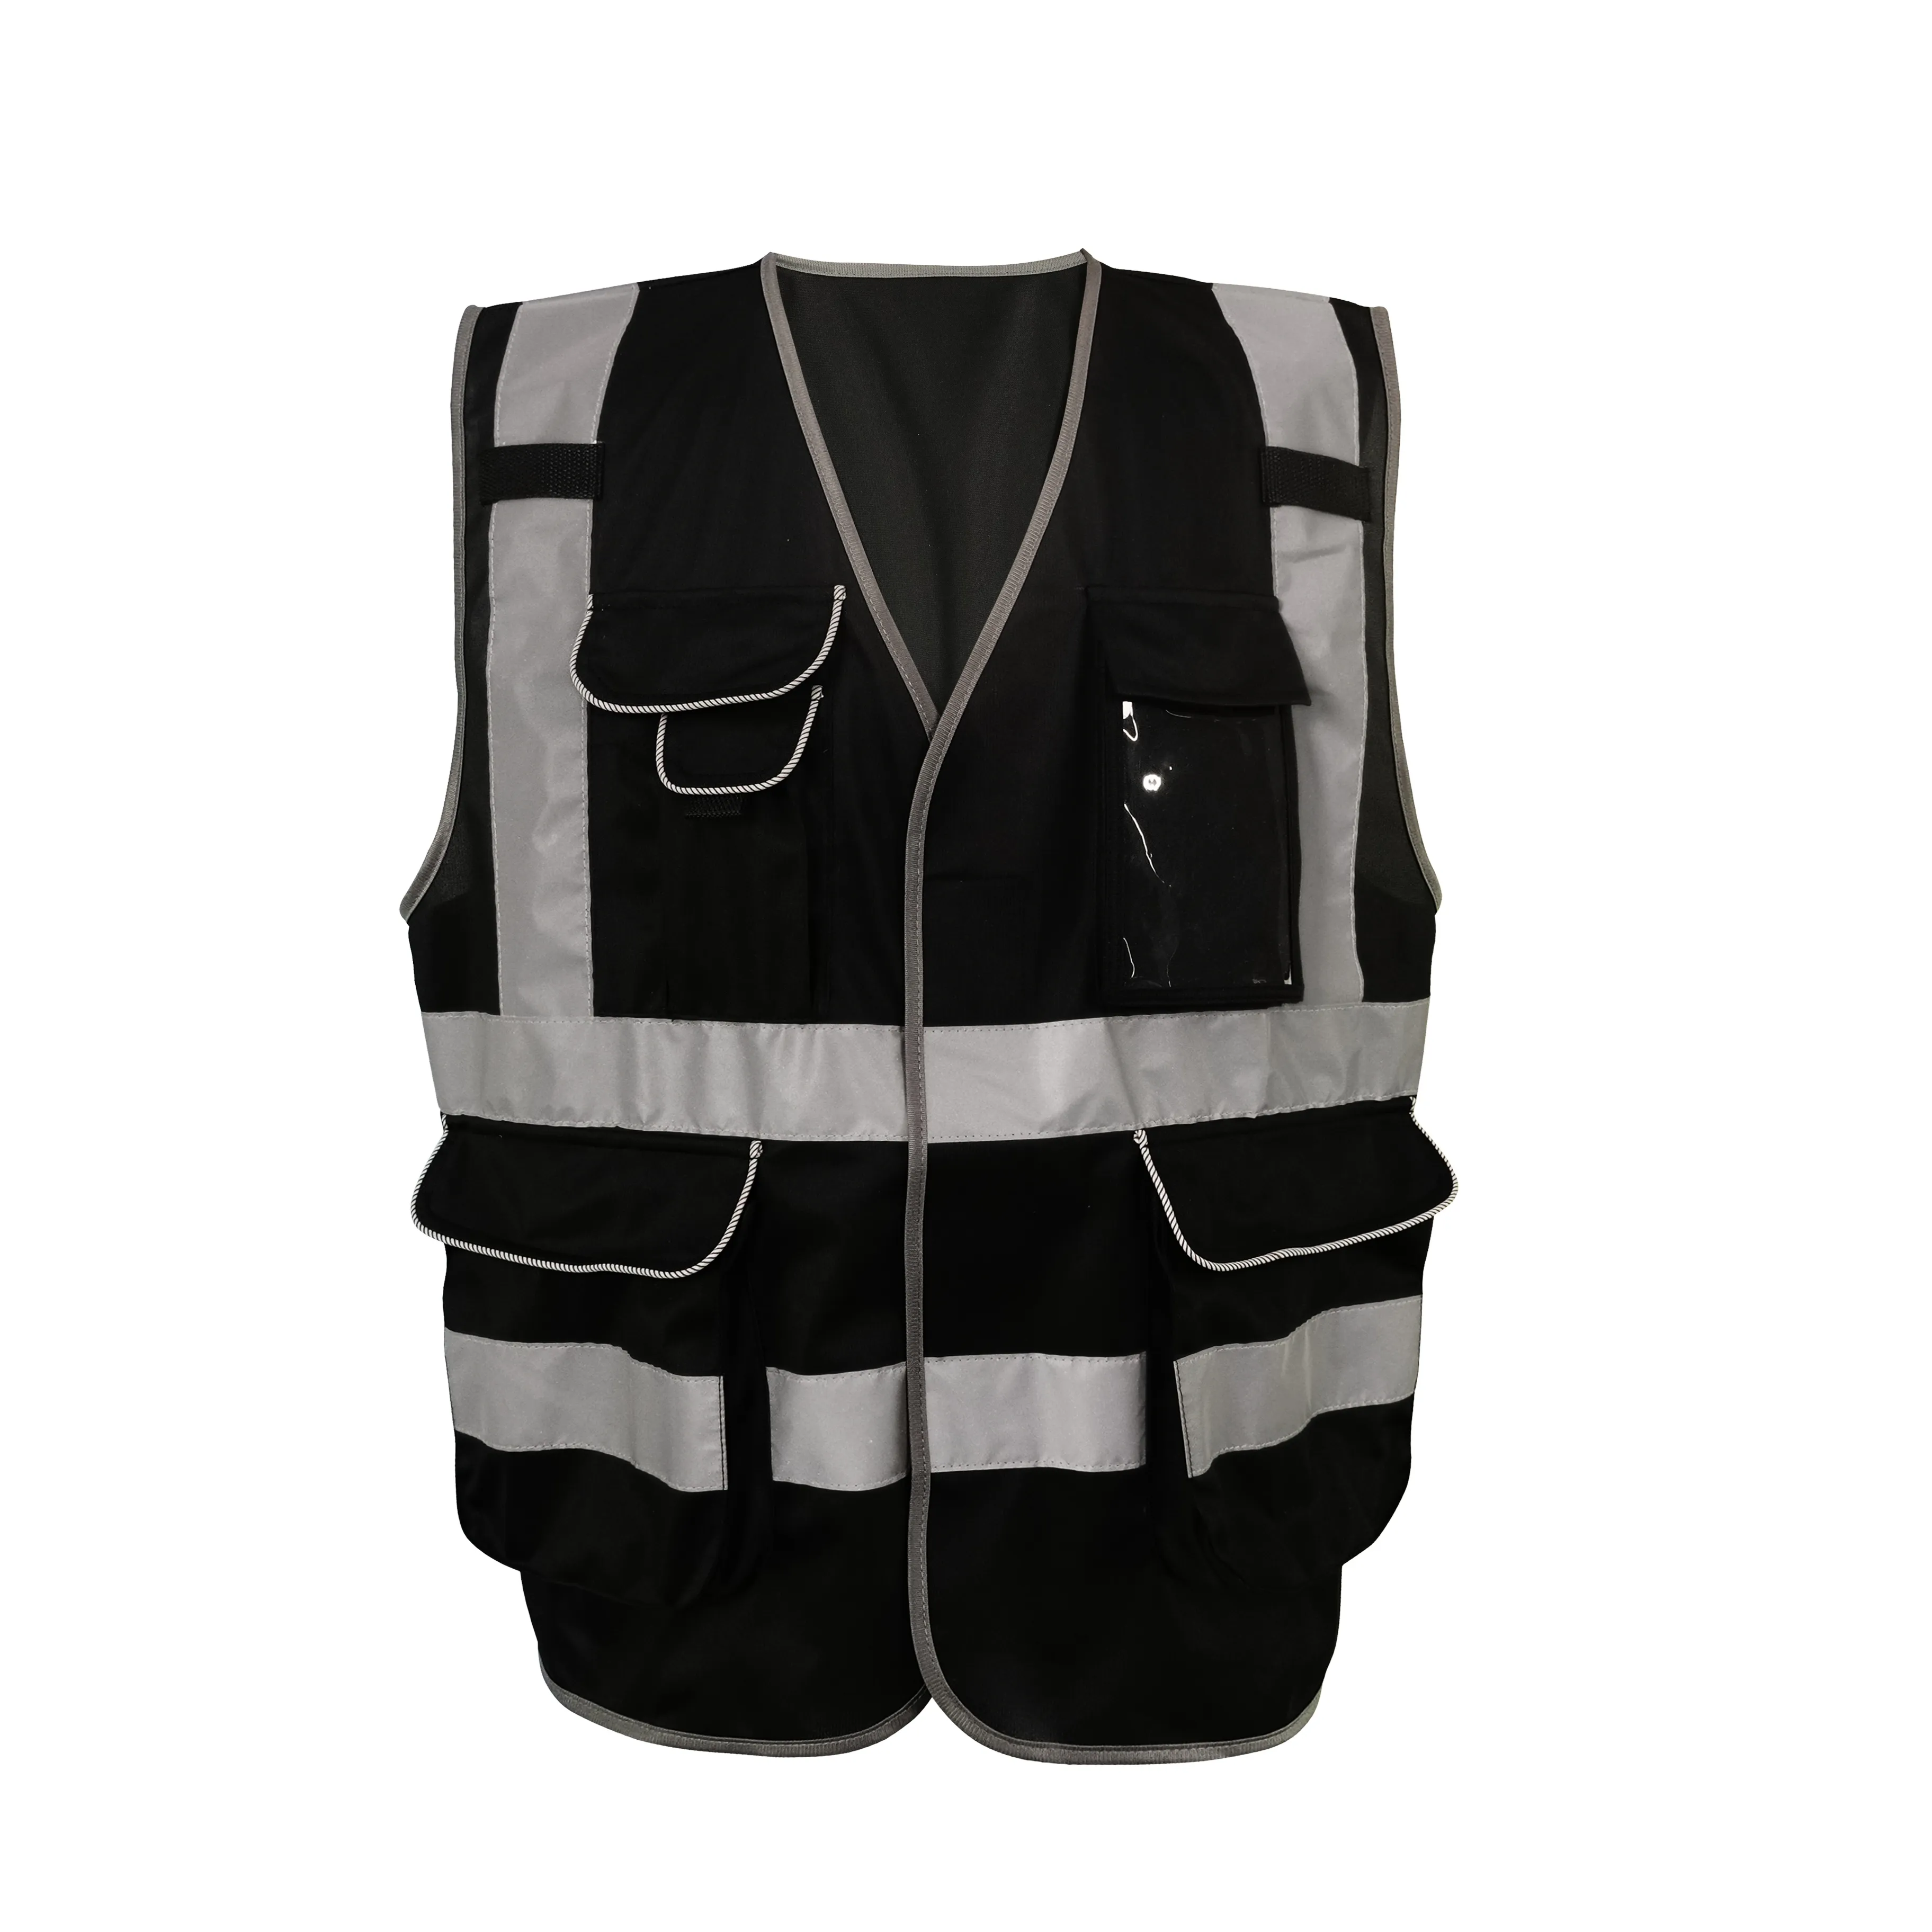 LX640 Wholesale Hi Vis Vest Protection High Reflective Safety Reflective Vest With Pockets